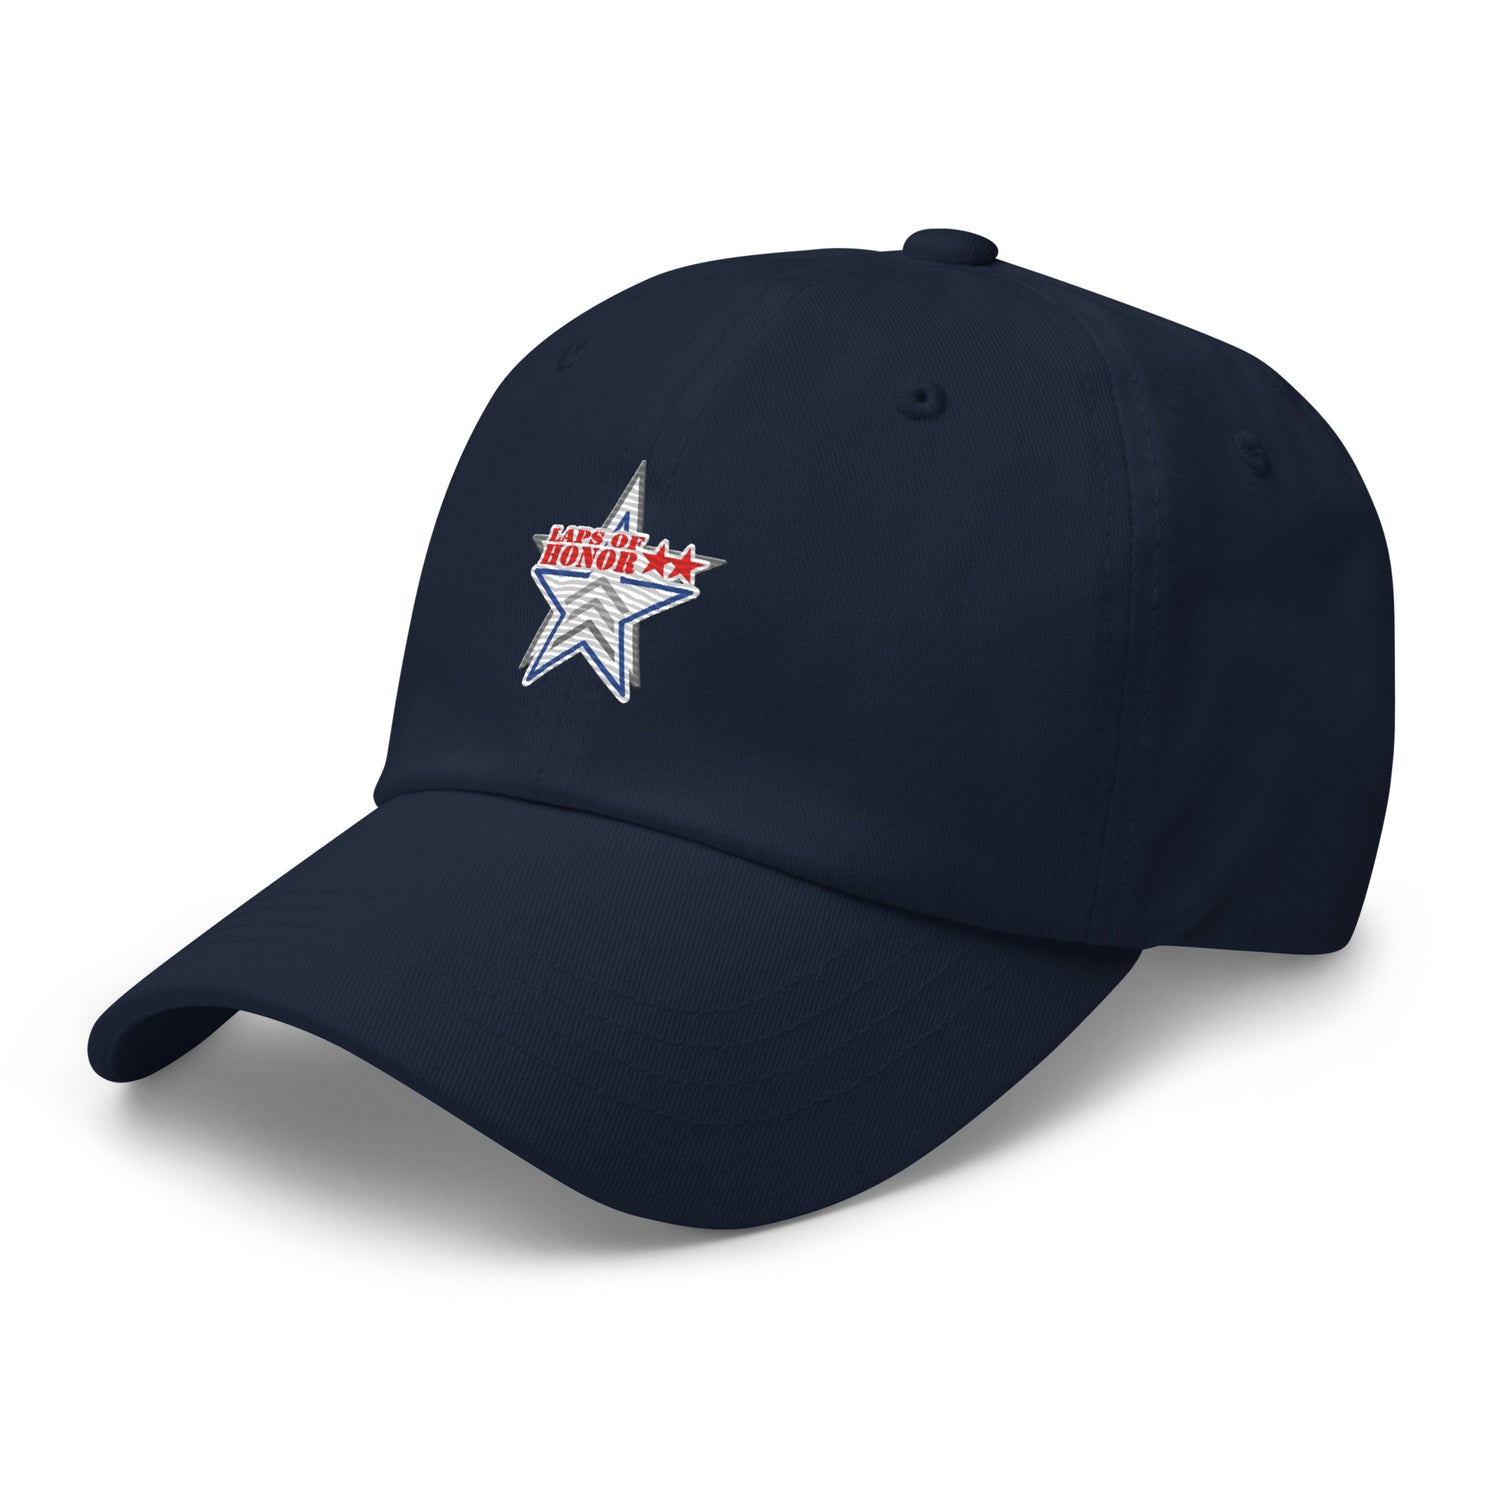 Laps of Honor Urban Explorer Hat